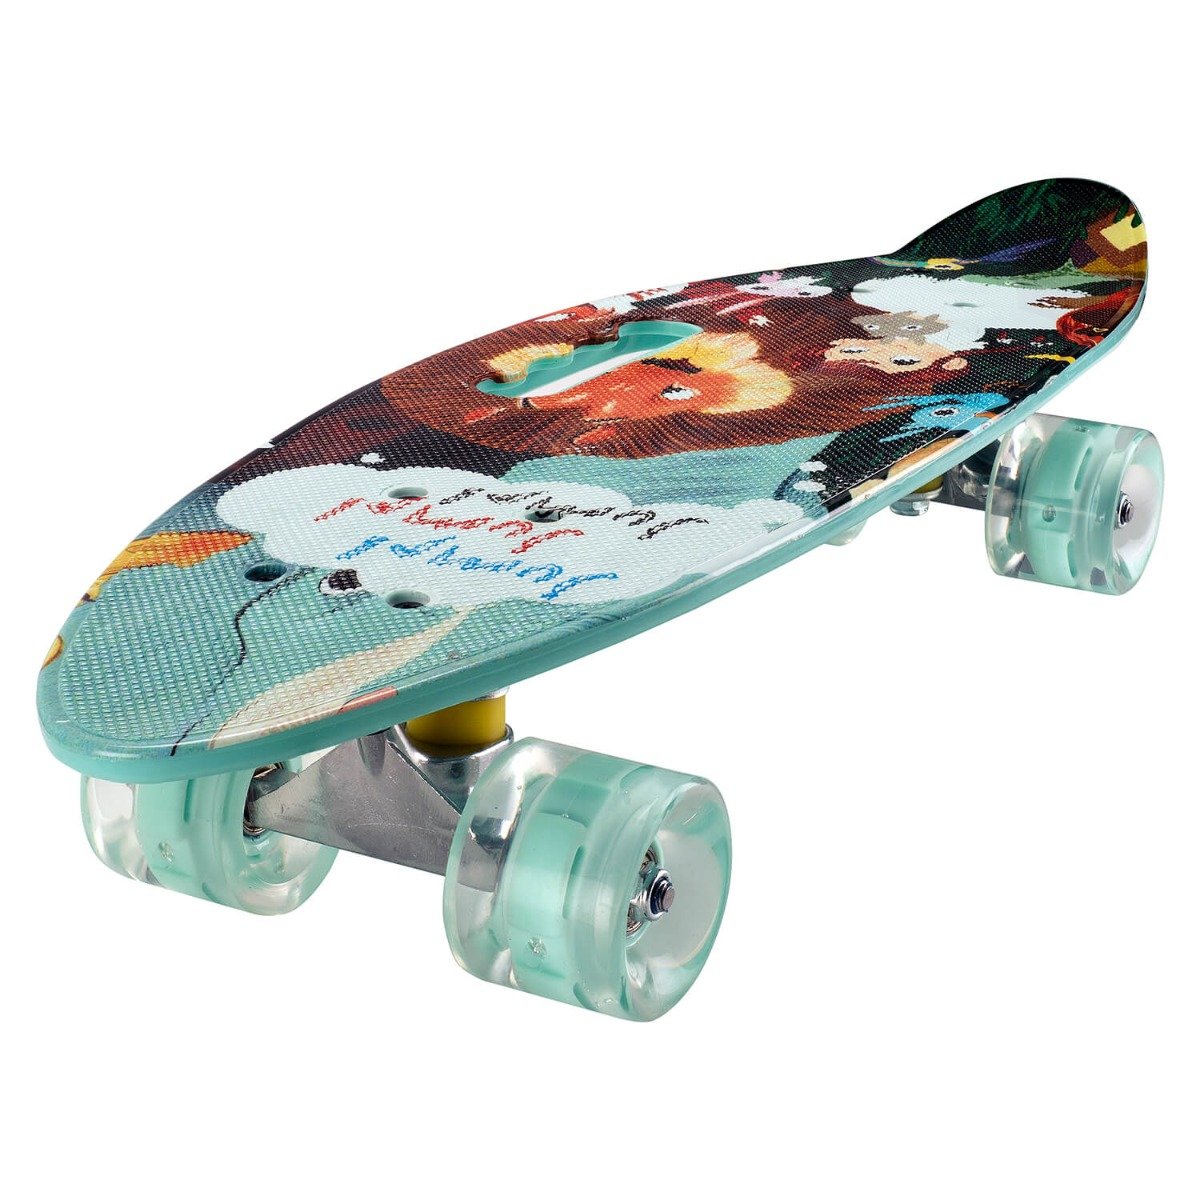 Penny board portabil Action One, ABEC-7 PU, Aluminiu Truck the lion Role si skateboard imagine 2022